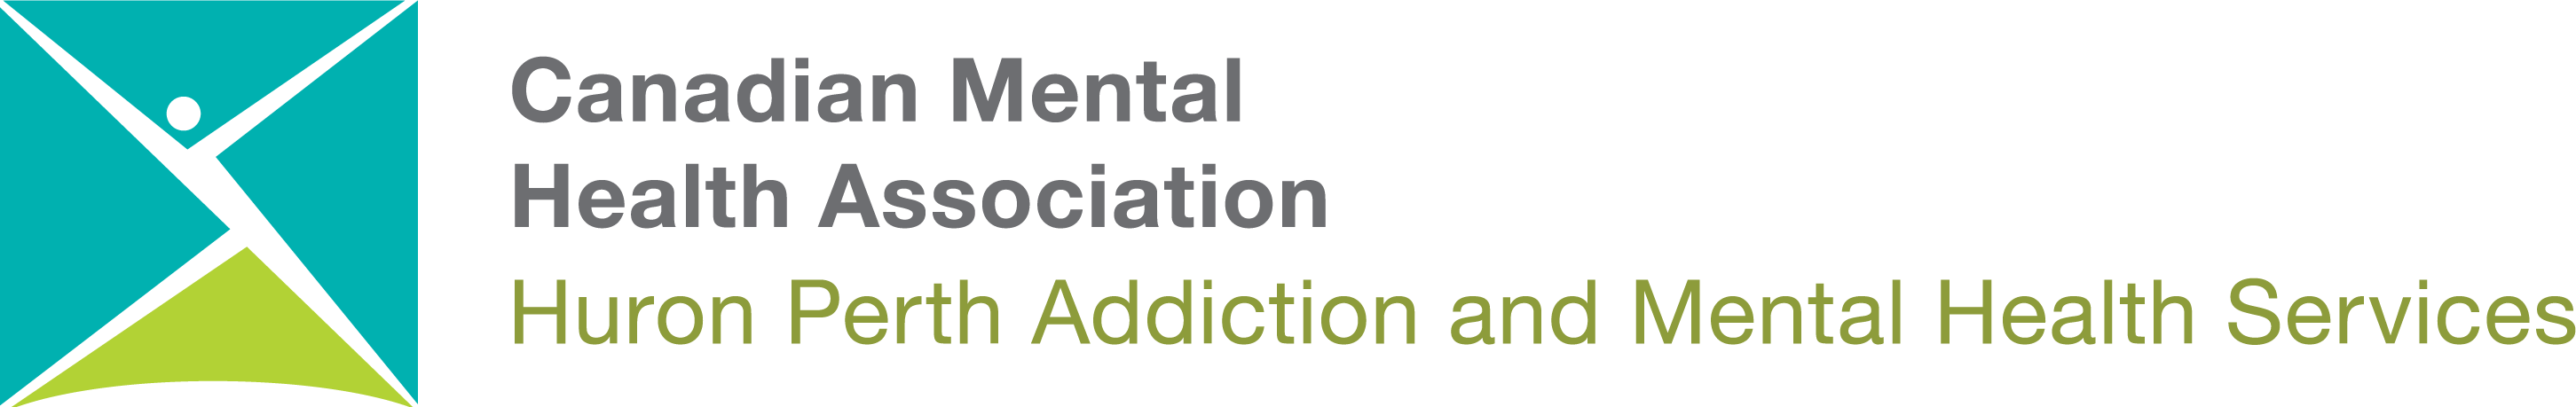 CMHA HP Addiction and Mental Health Services